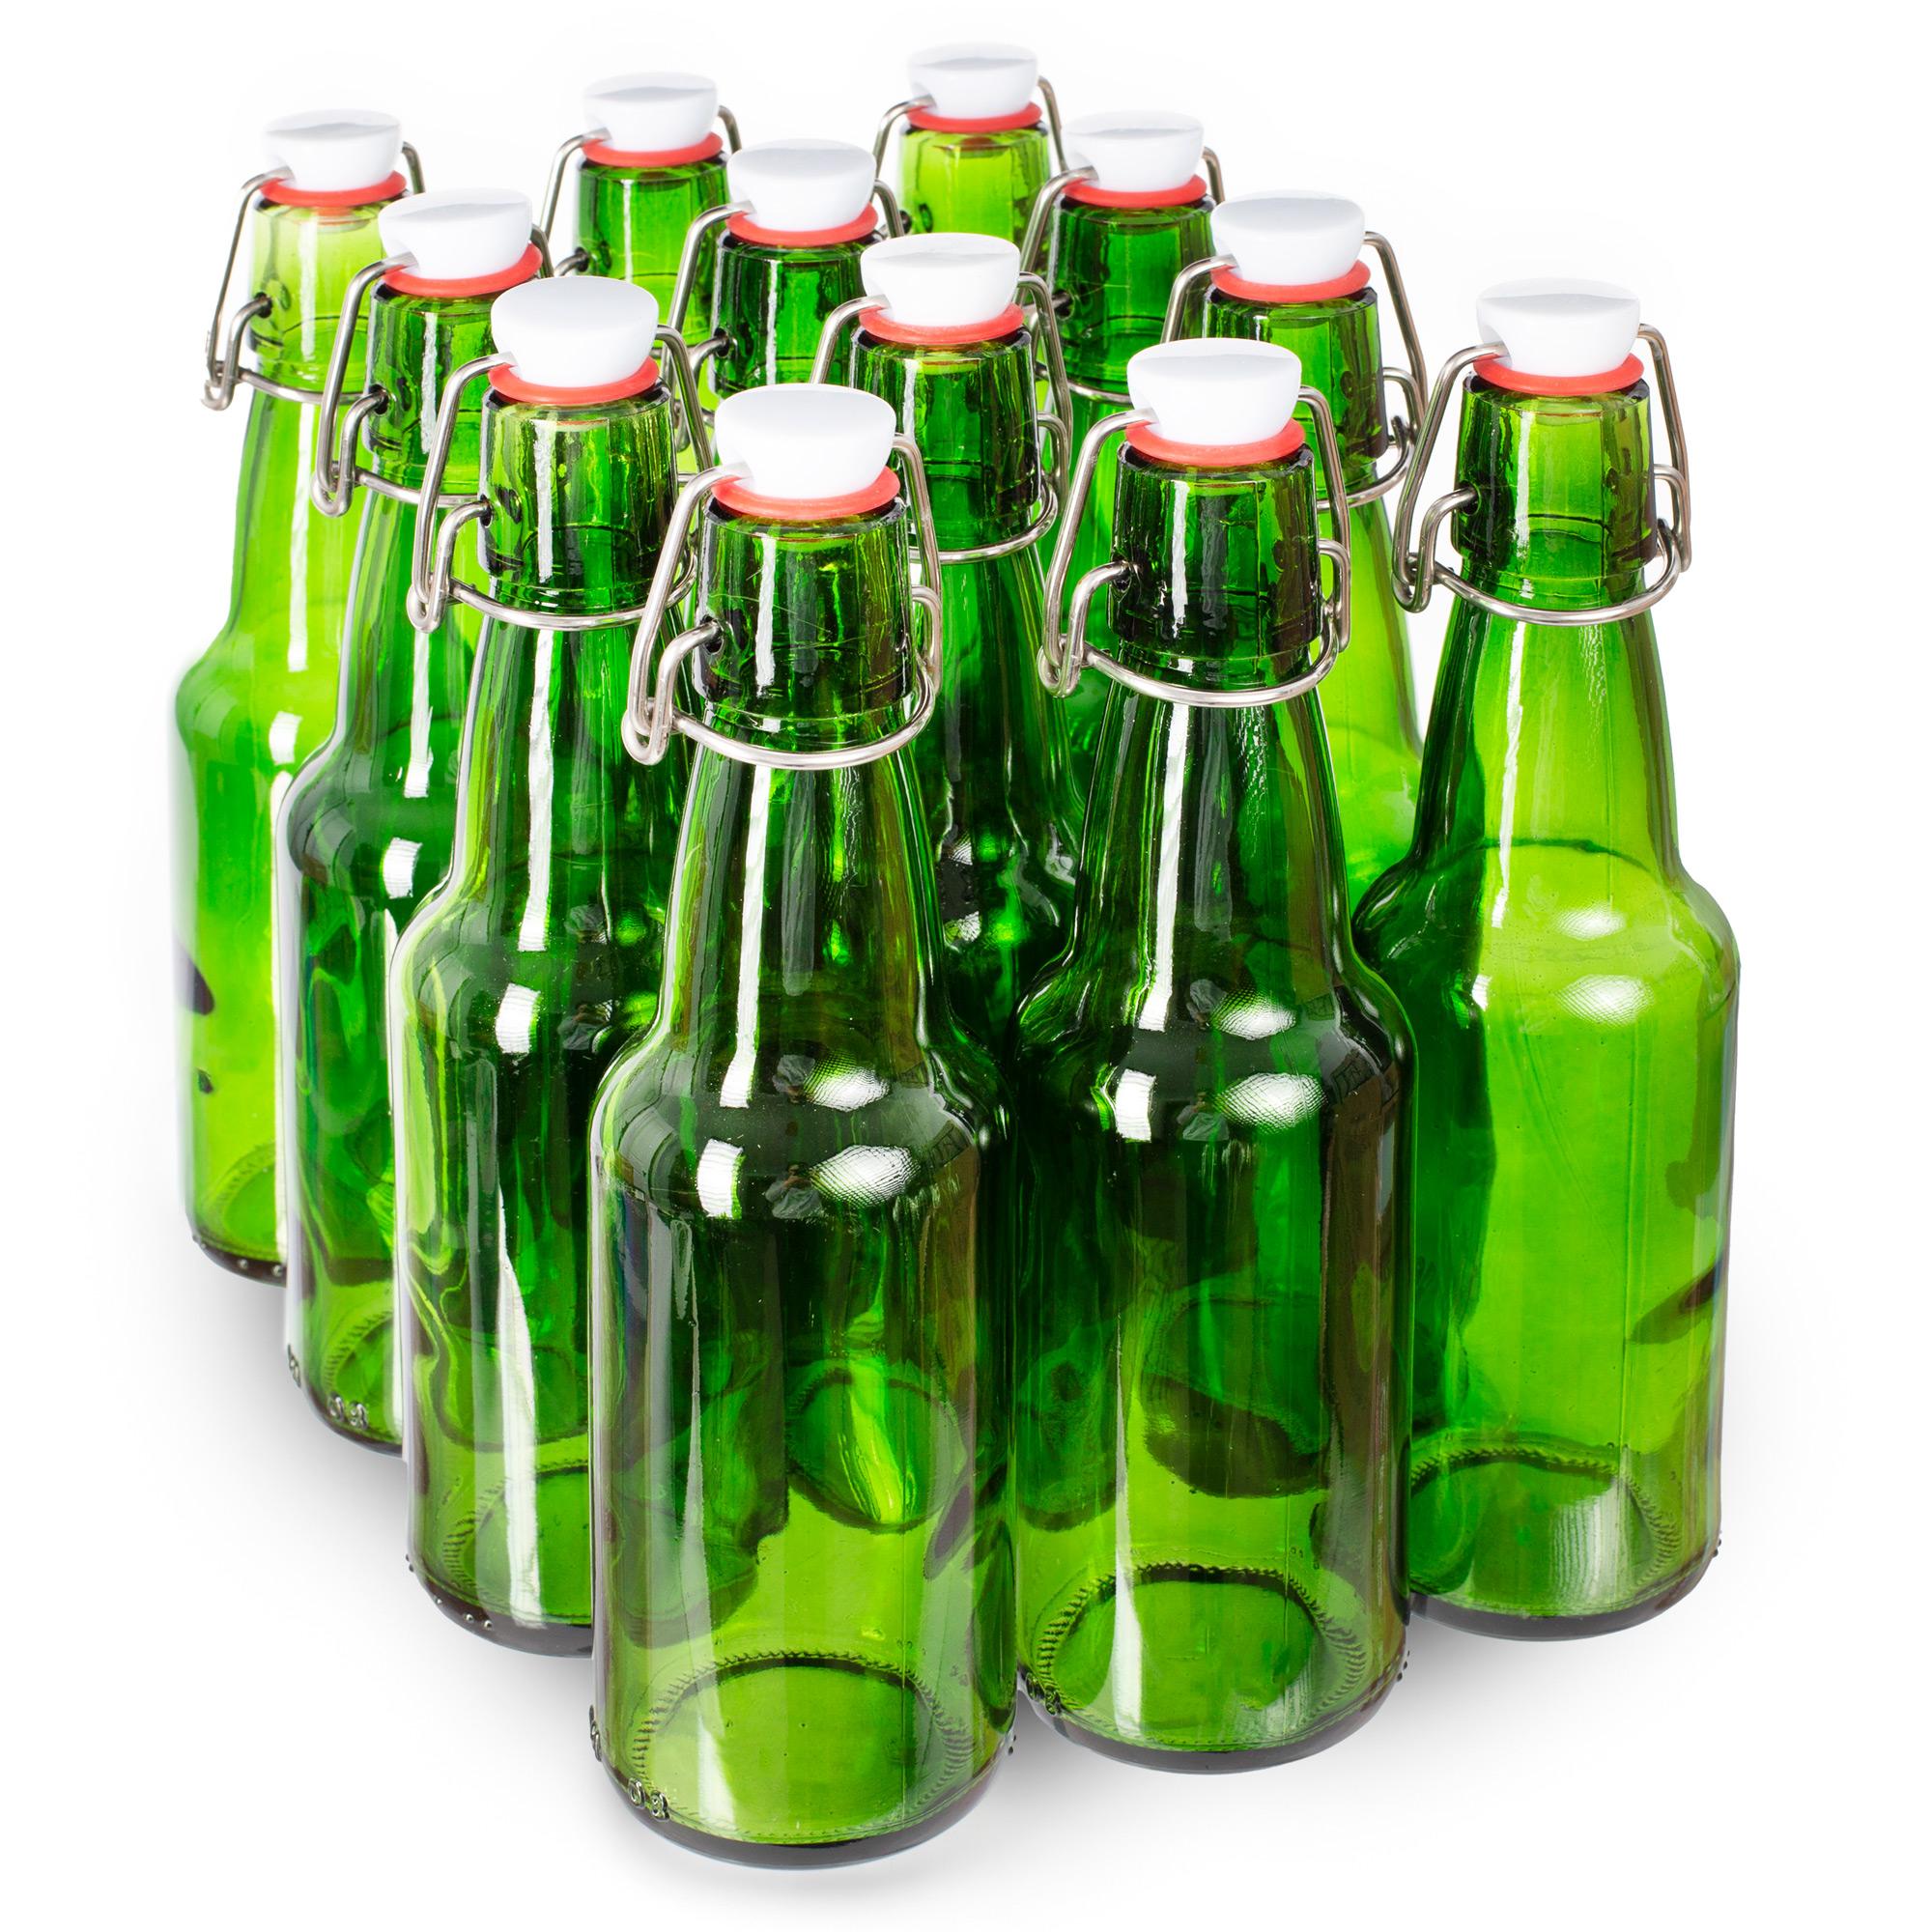 Swing-top Grolsch Bottles for Homebrewing